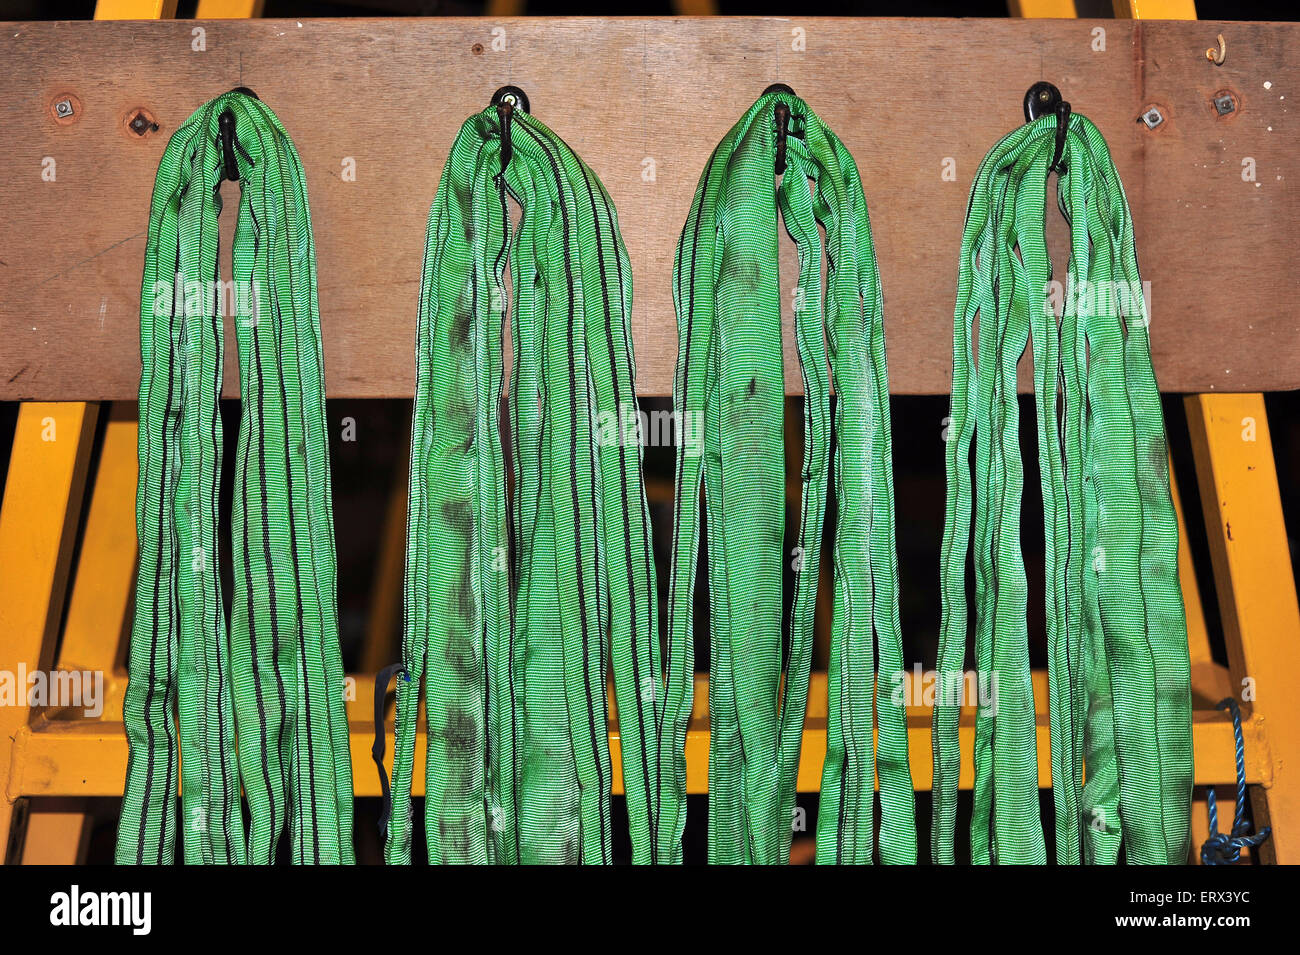 https://c8.alamy.com/comp/ERX3YC/a-set-of-four-heavy-duty-green-ropes-hanging-from-hooks-inside-the-ERX3YC.jpg